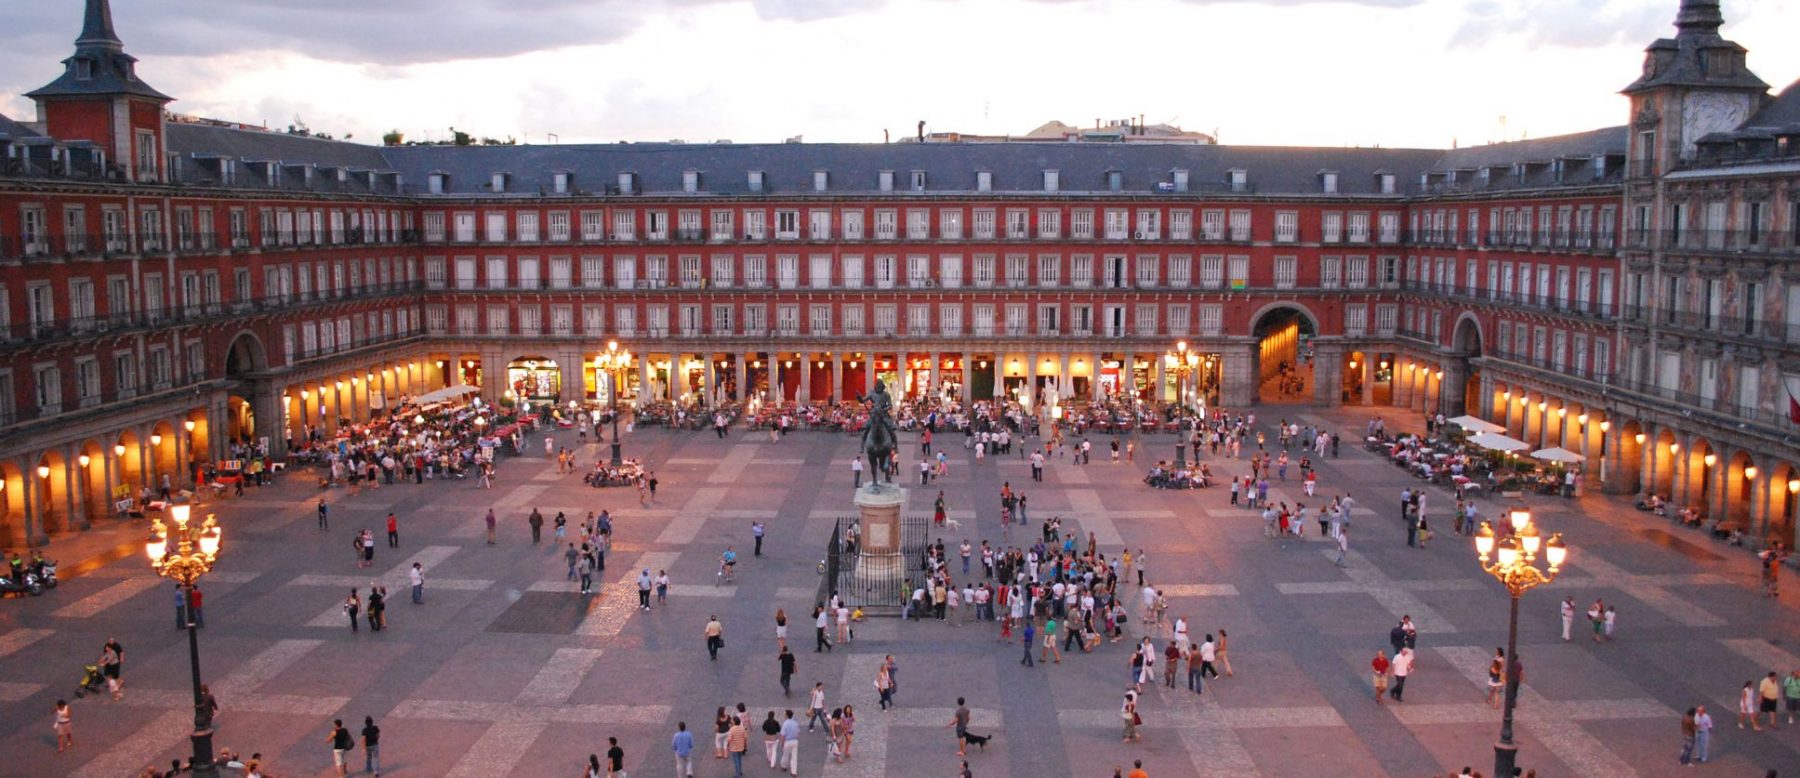 Plaza_Mayor_de_Madrid-e1519728258293